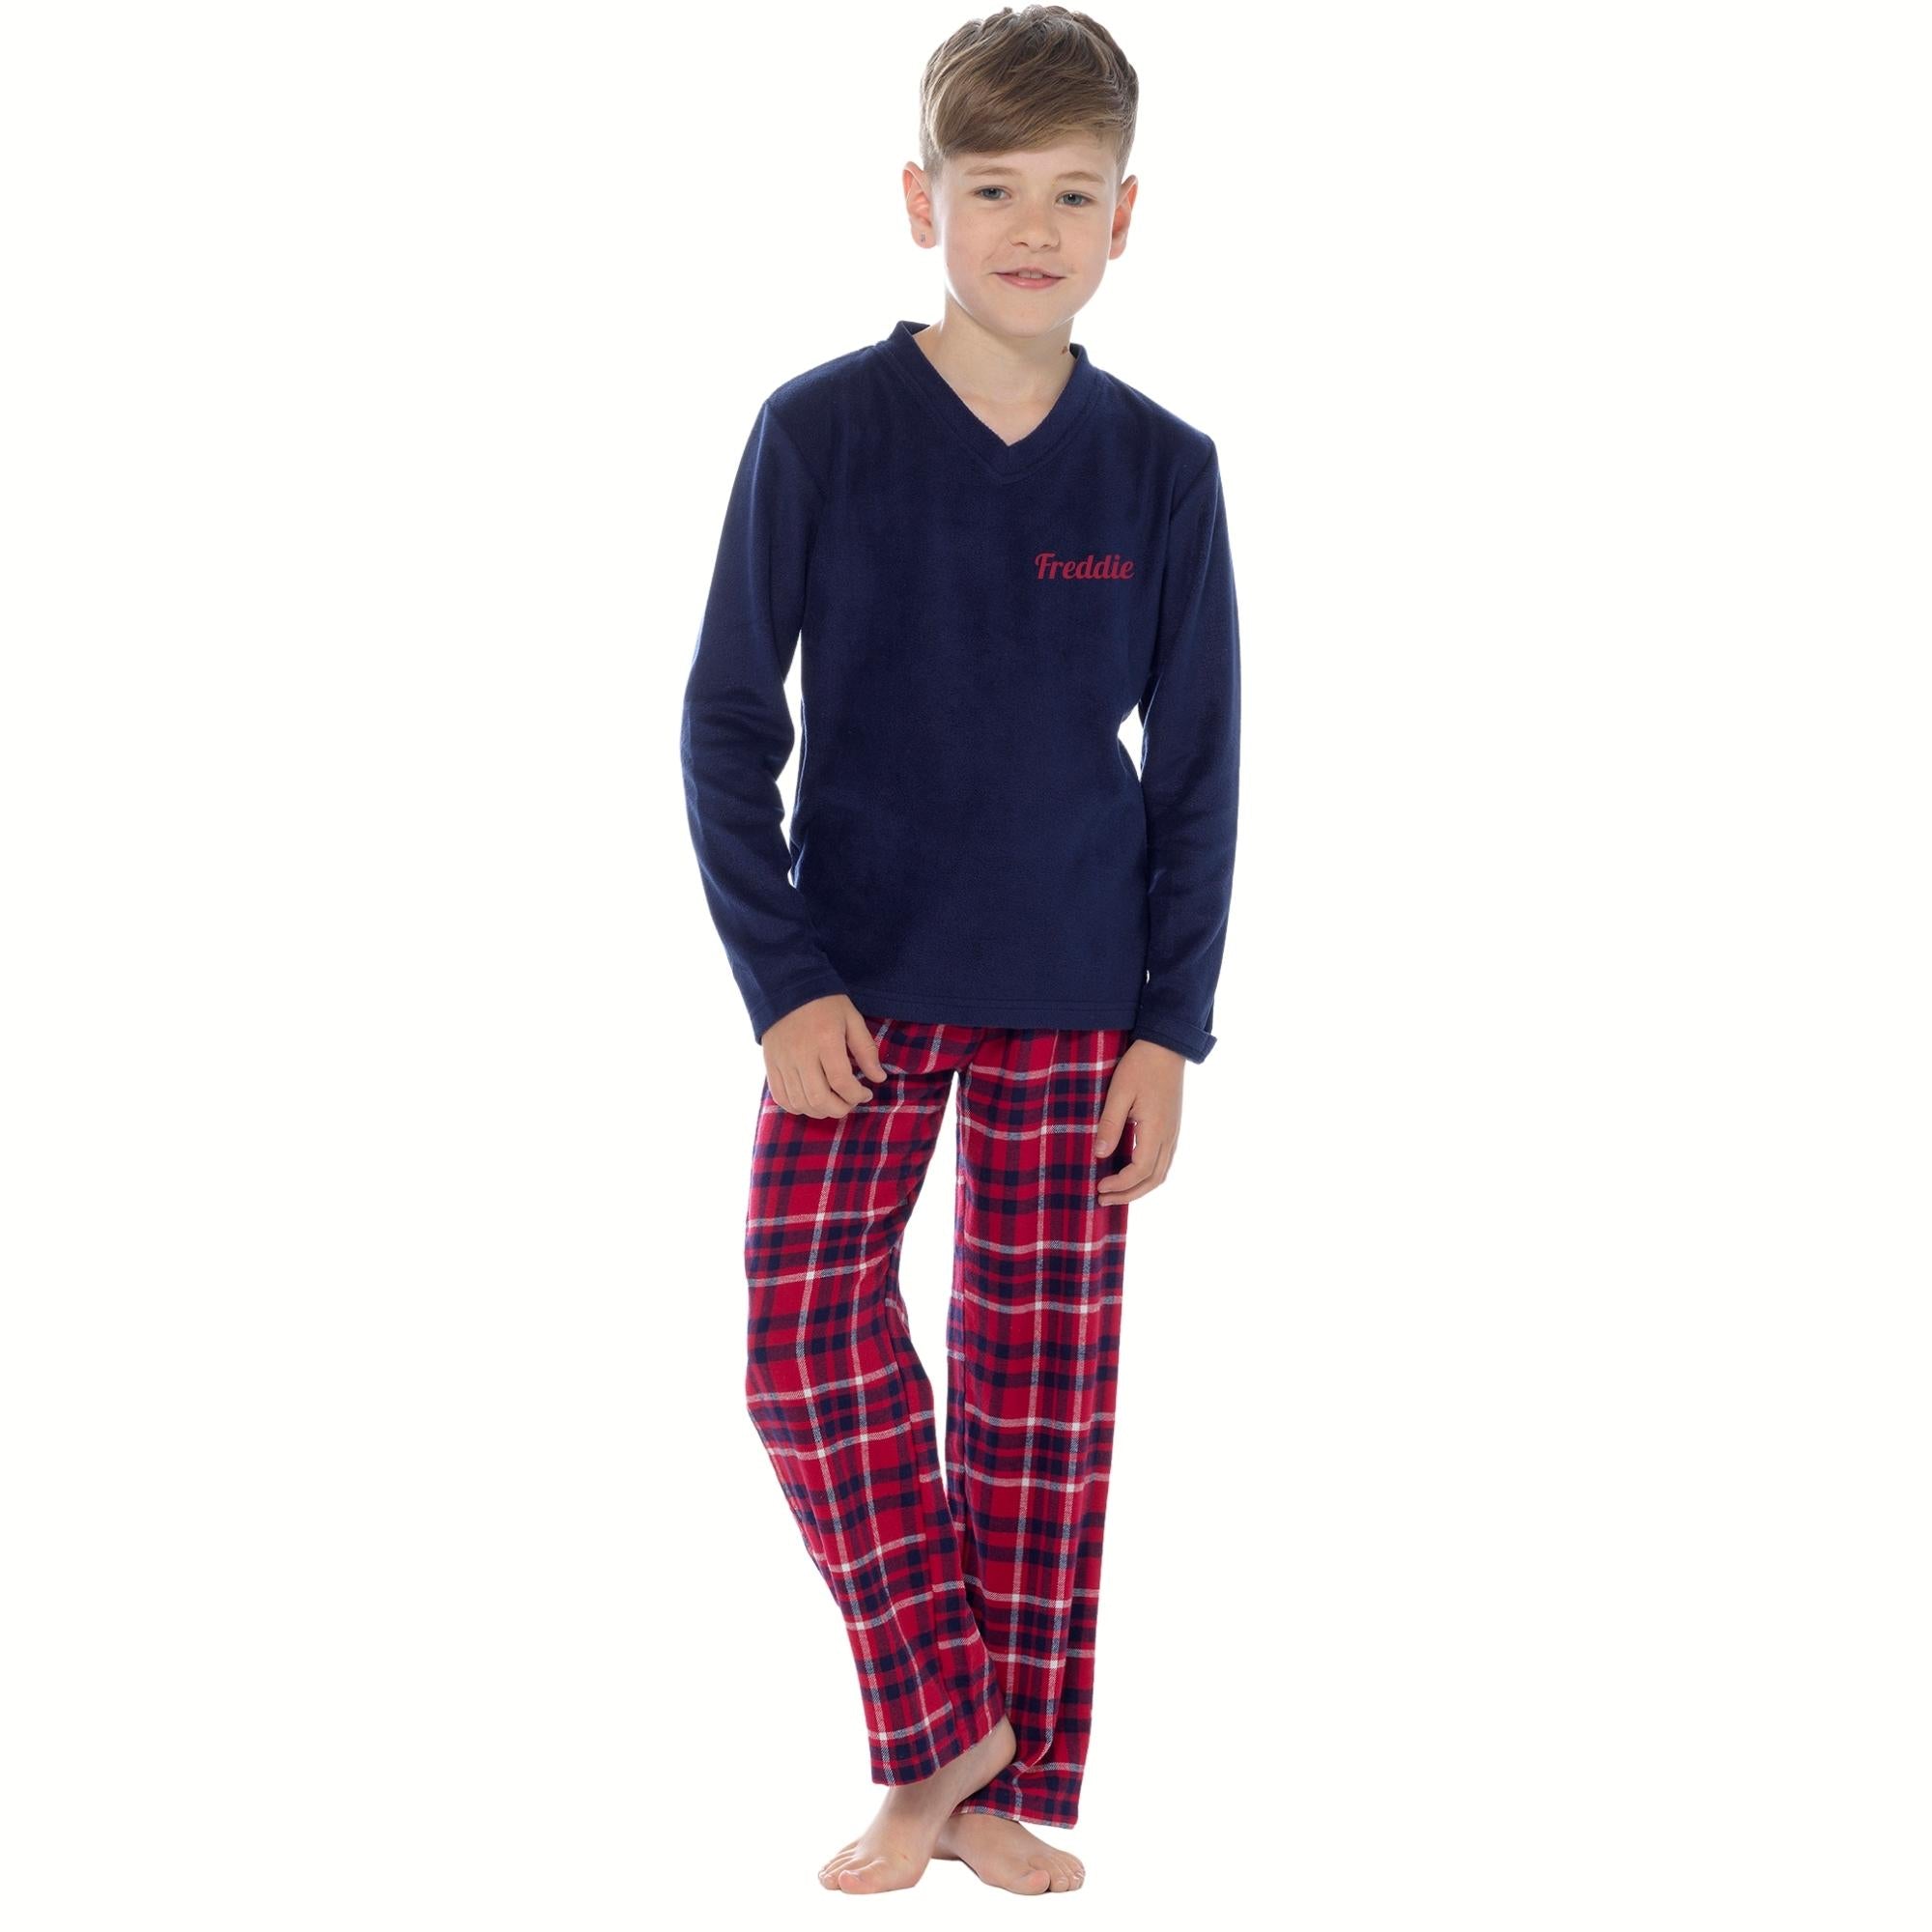 Boys Flannel Check Pants Navy Pyjamas